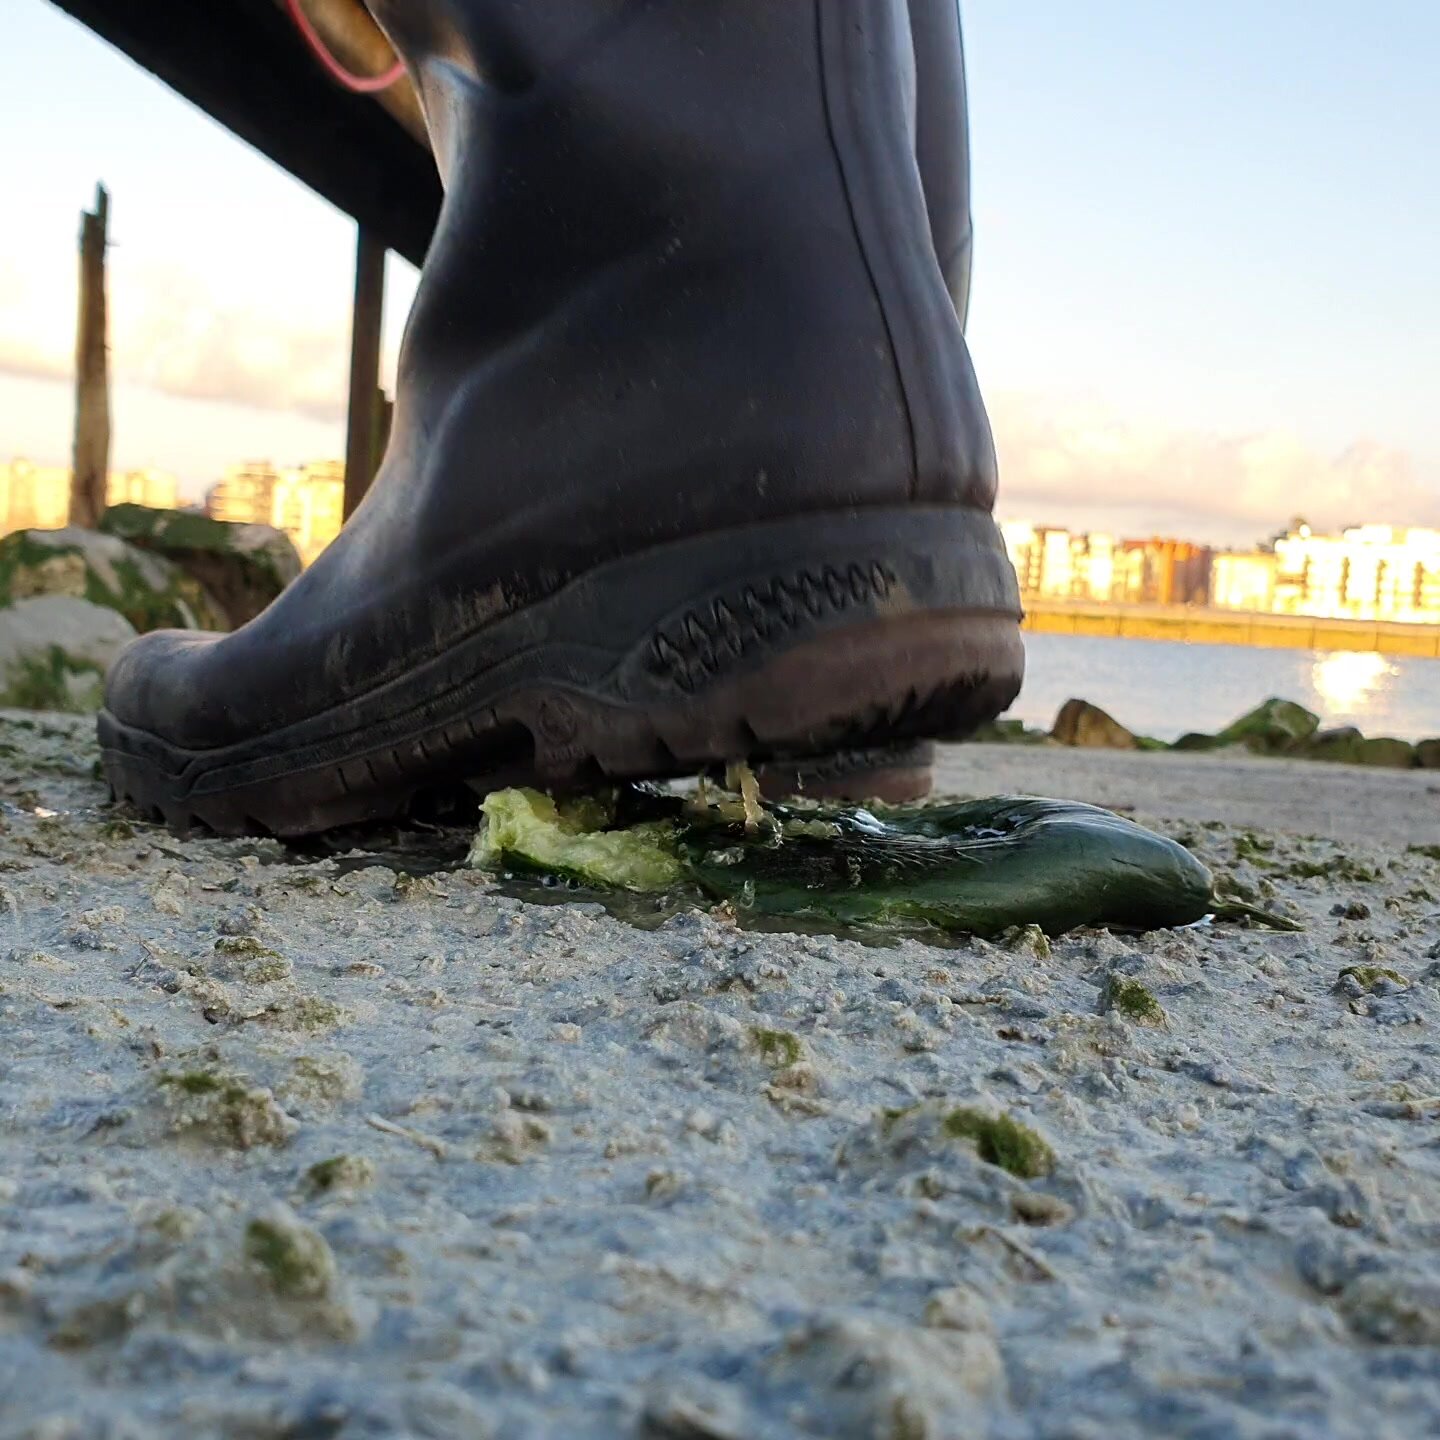 Aigle boots stomp cucumber